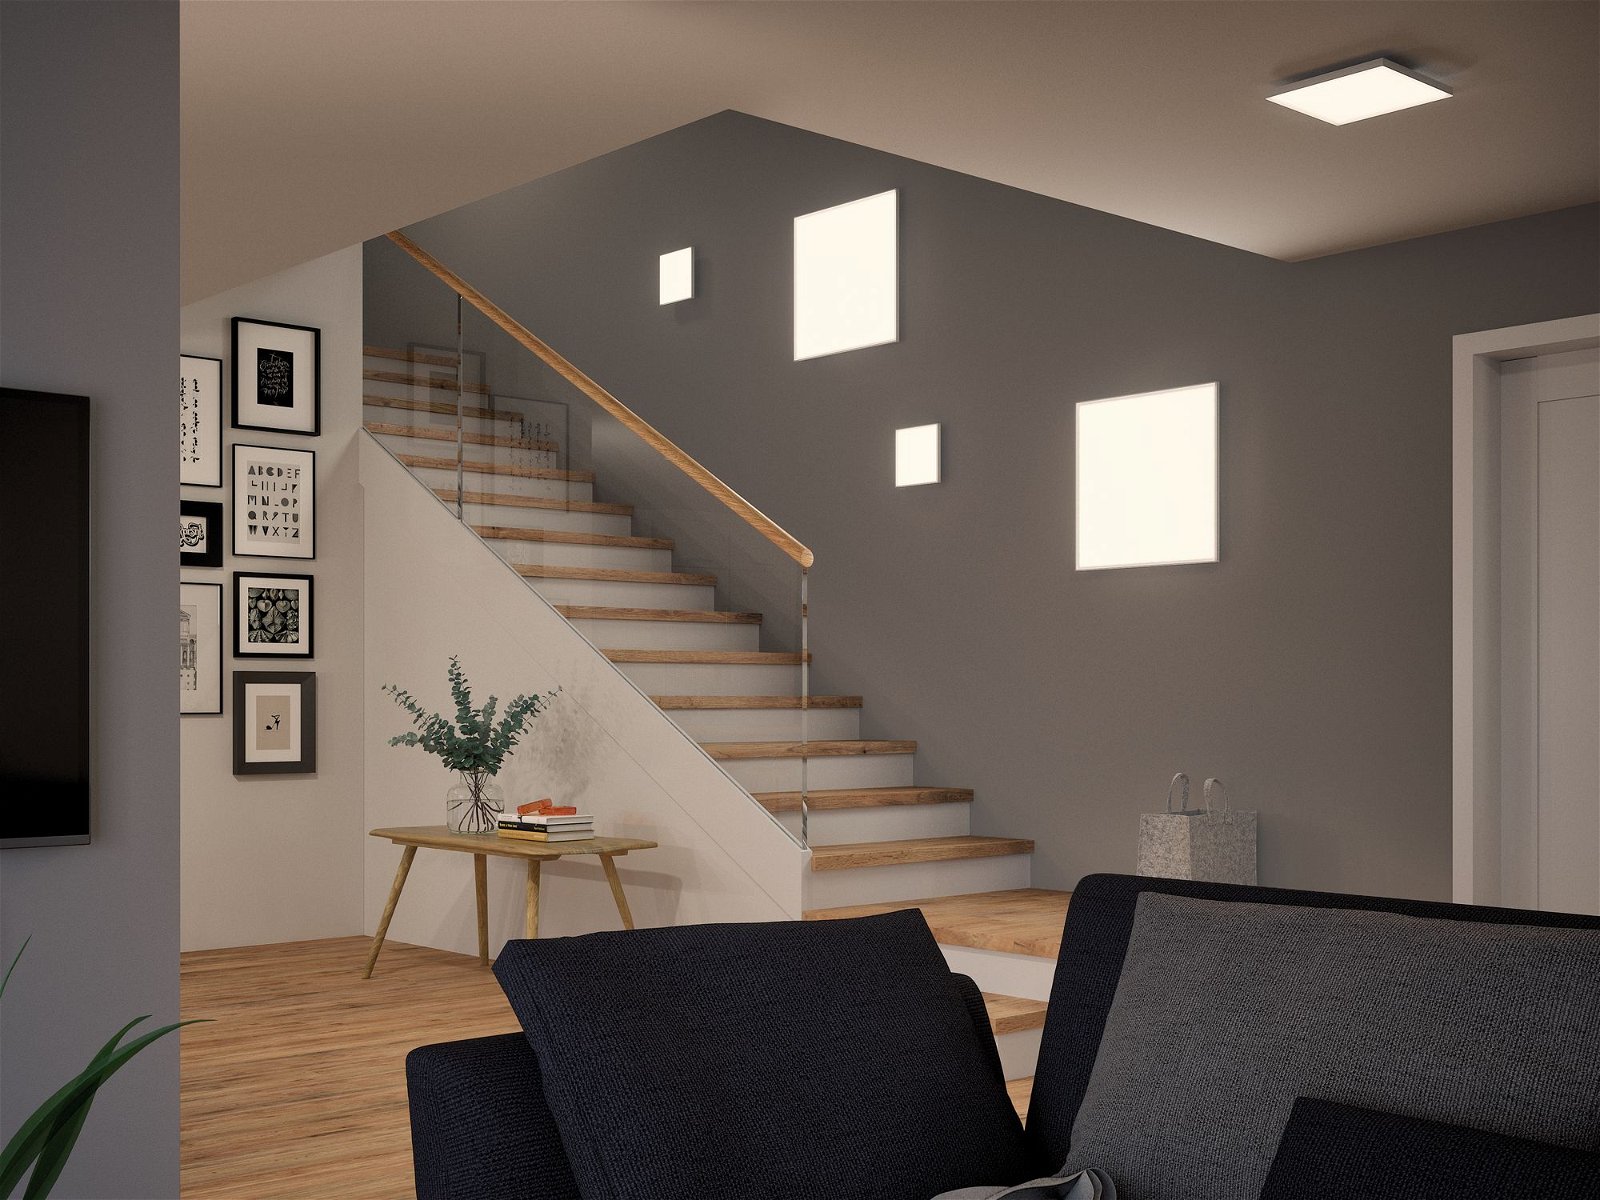 Panneau LED Smart Home Zigbee Velora carré 295x295mm 10,5W 1100lm Tunable White Blanc dépoli gradable